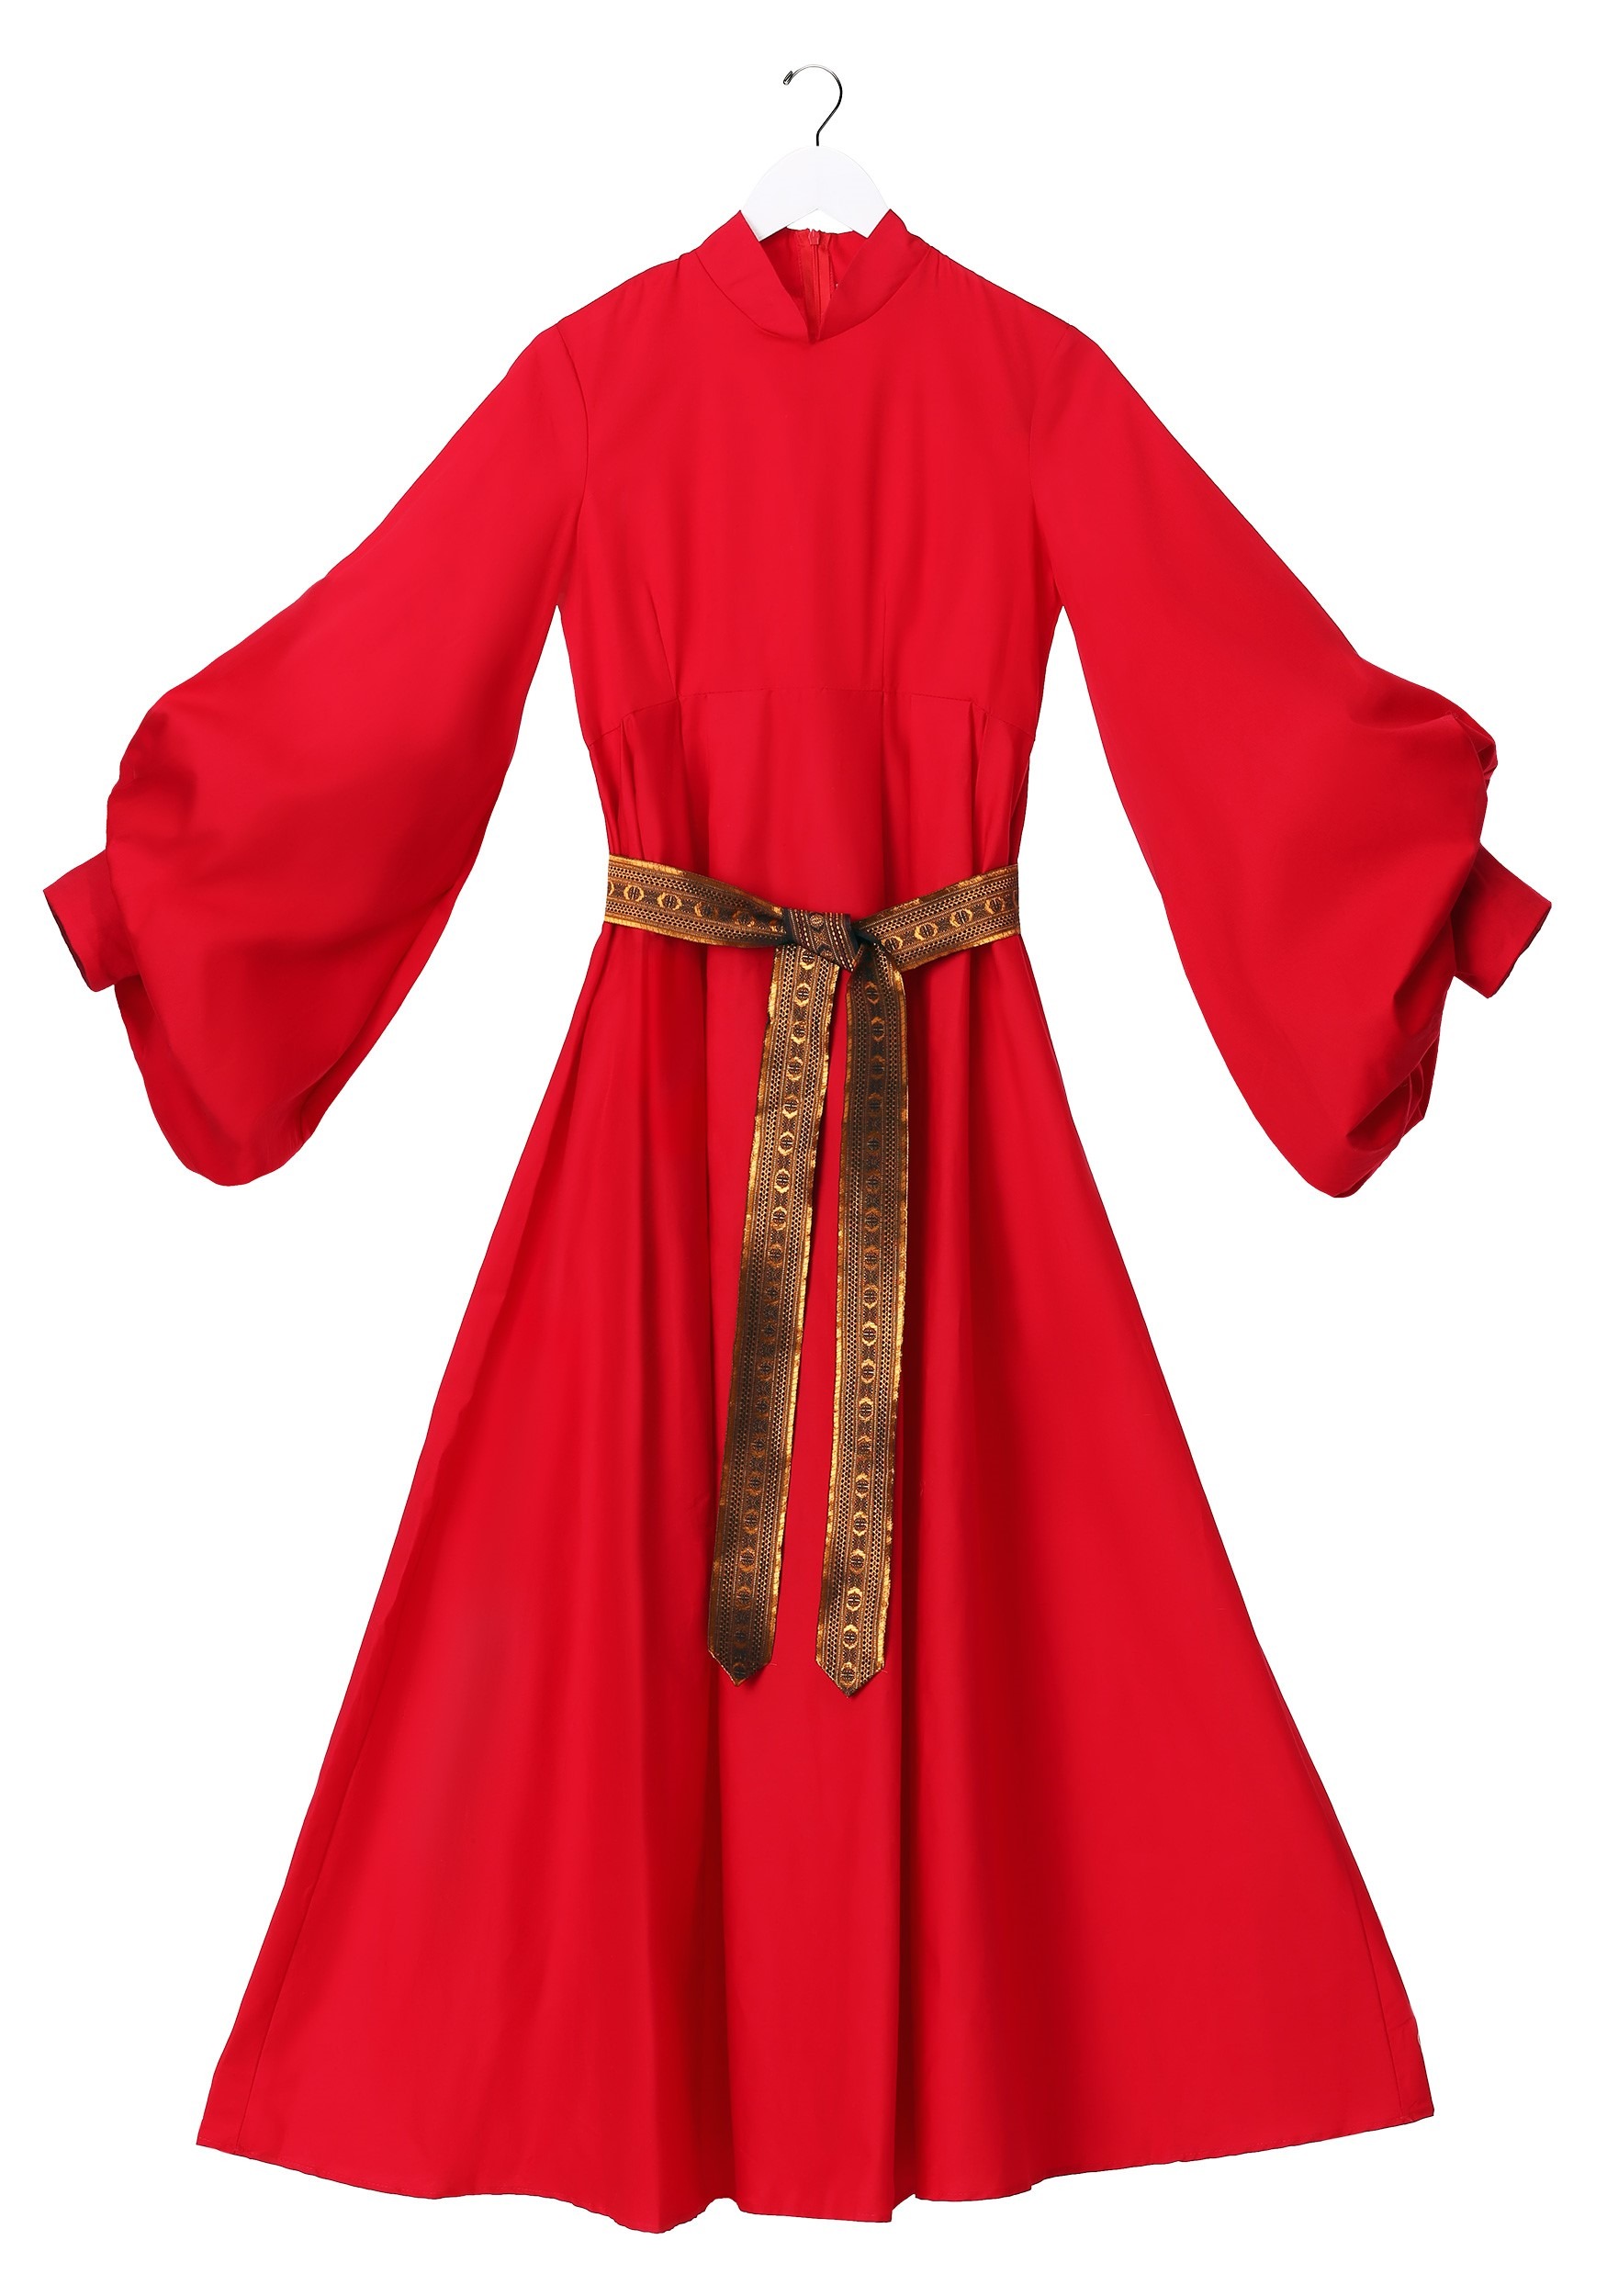 Plus Size Buttercup Peasant Costume Dress For Women